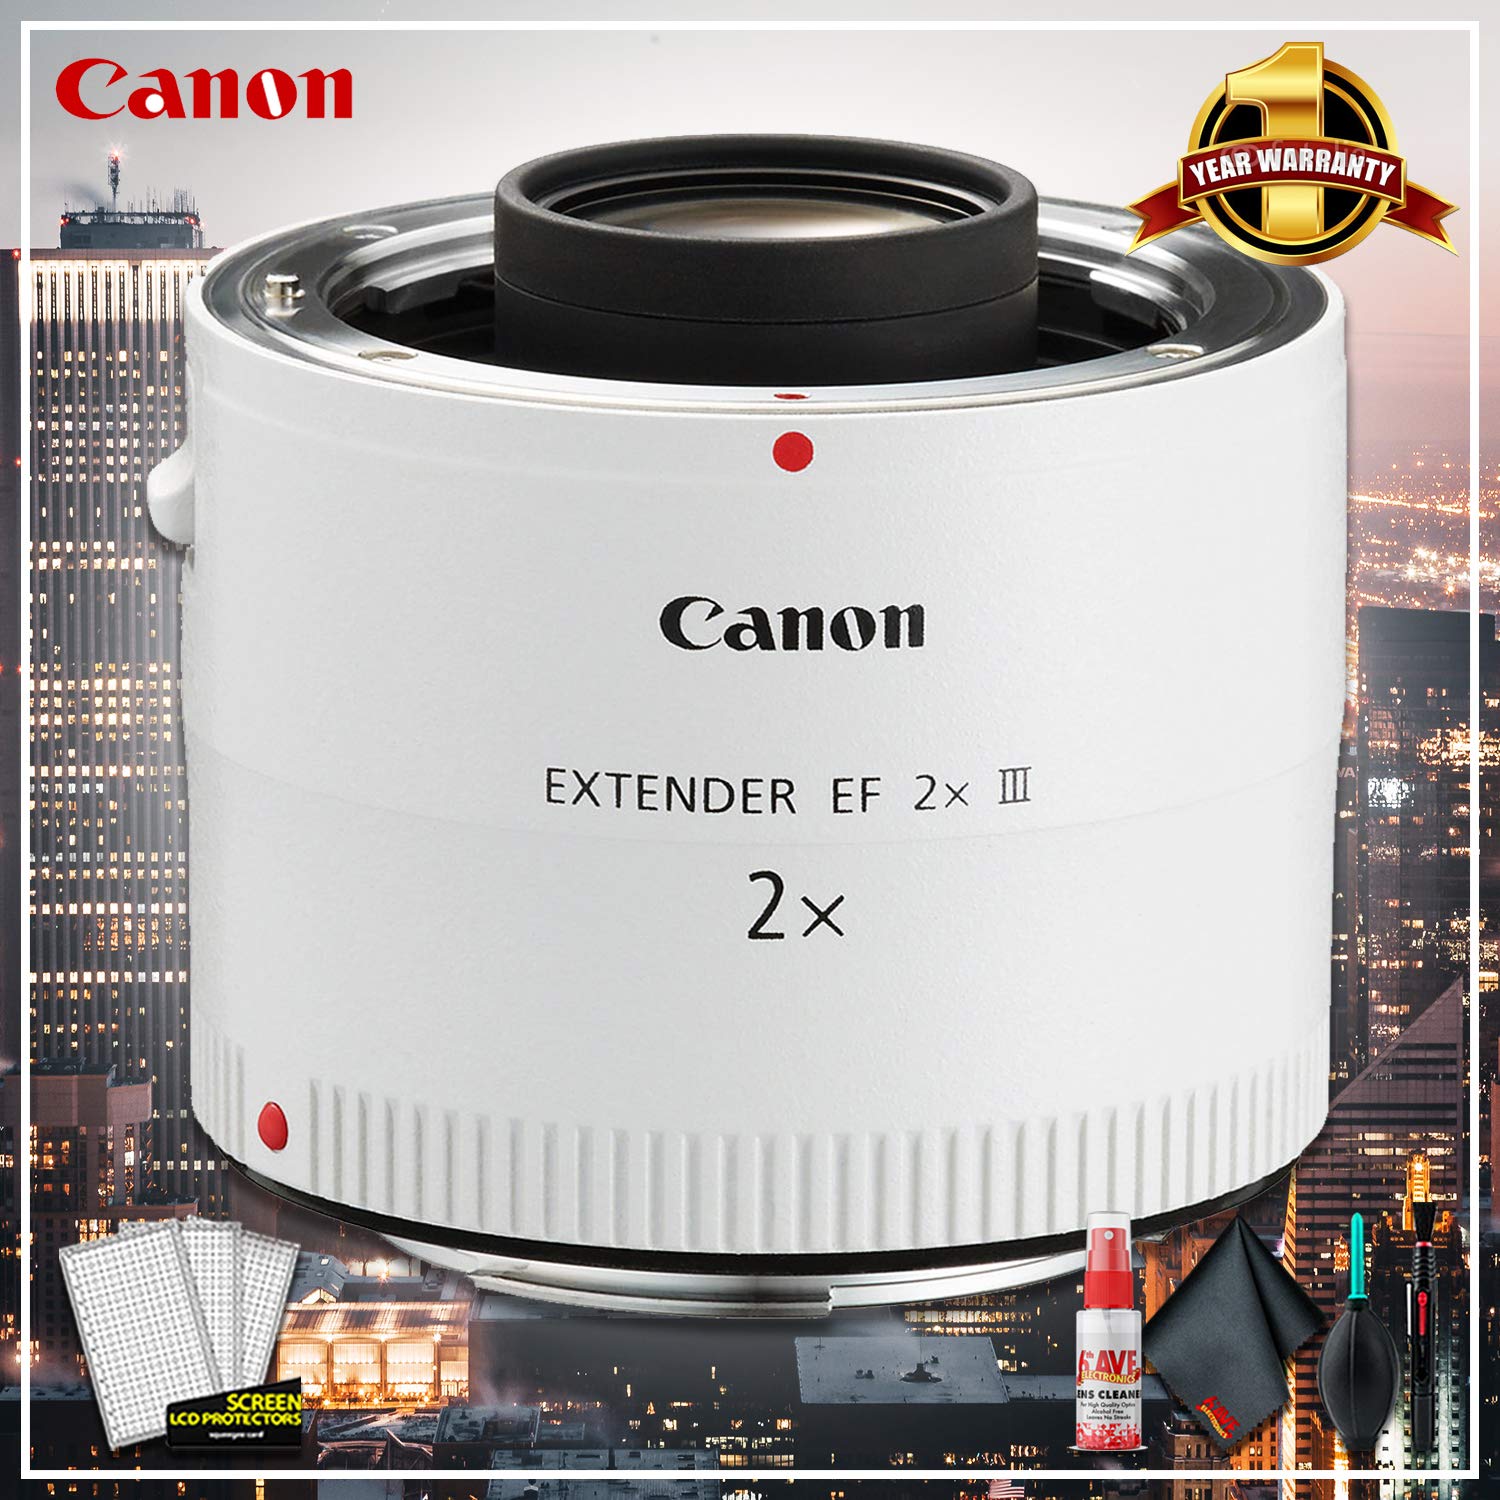 Canon Extender EF 2X III (Intl Model) + Cleaning Kit